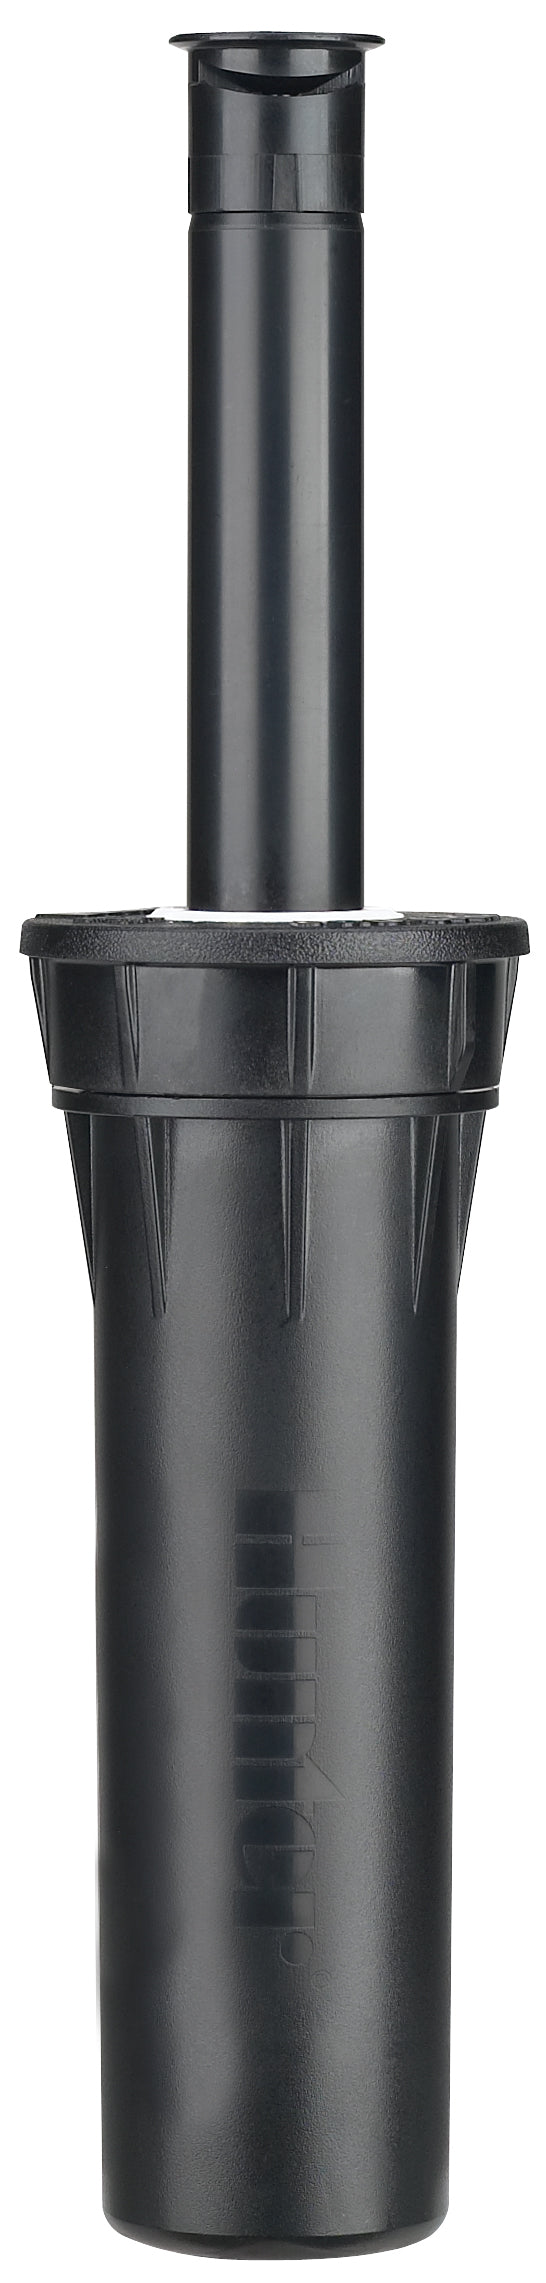 Hunter Pro Spray Nozzle 6Q 90 Degree Short Range Nozzle